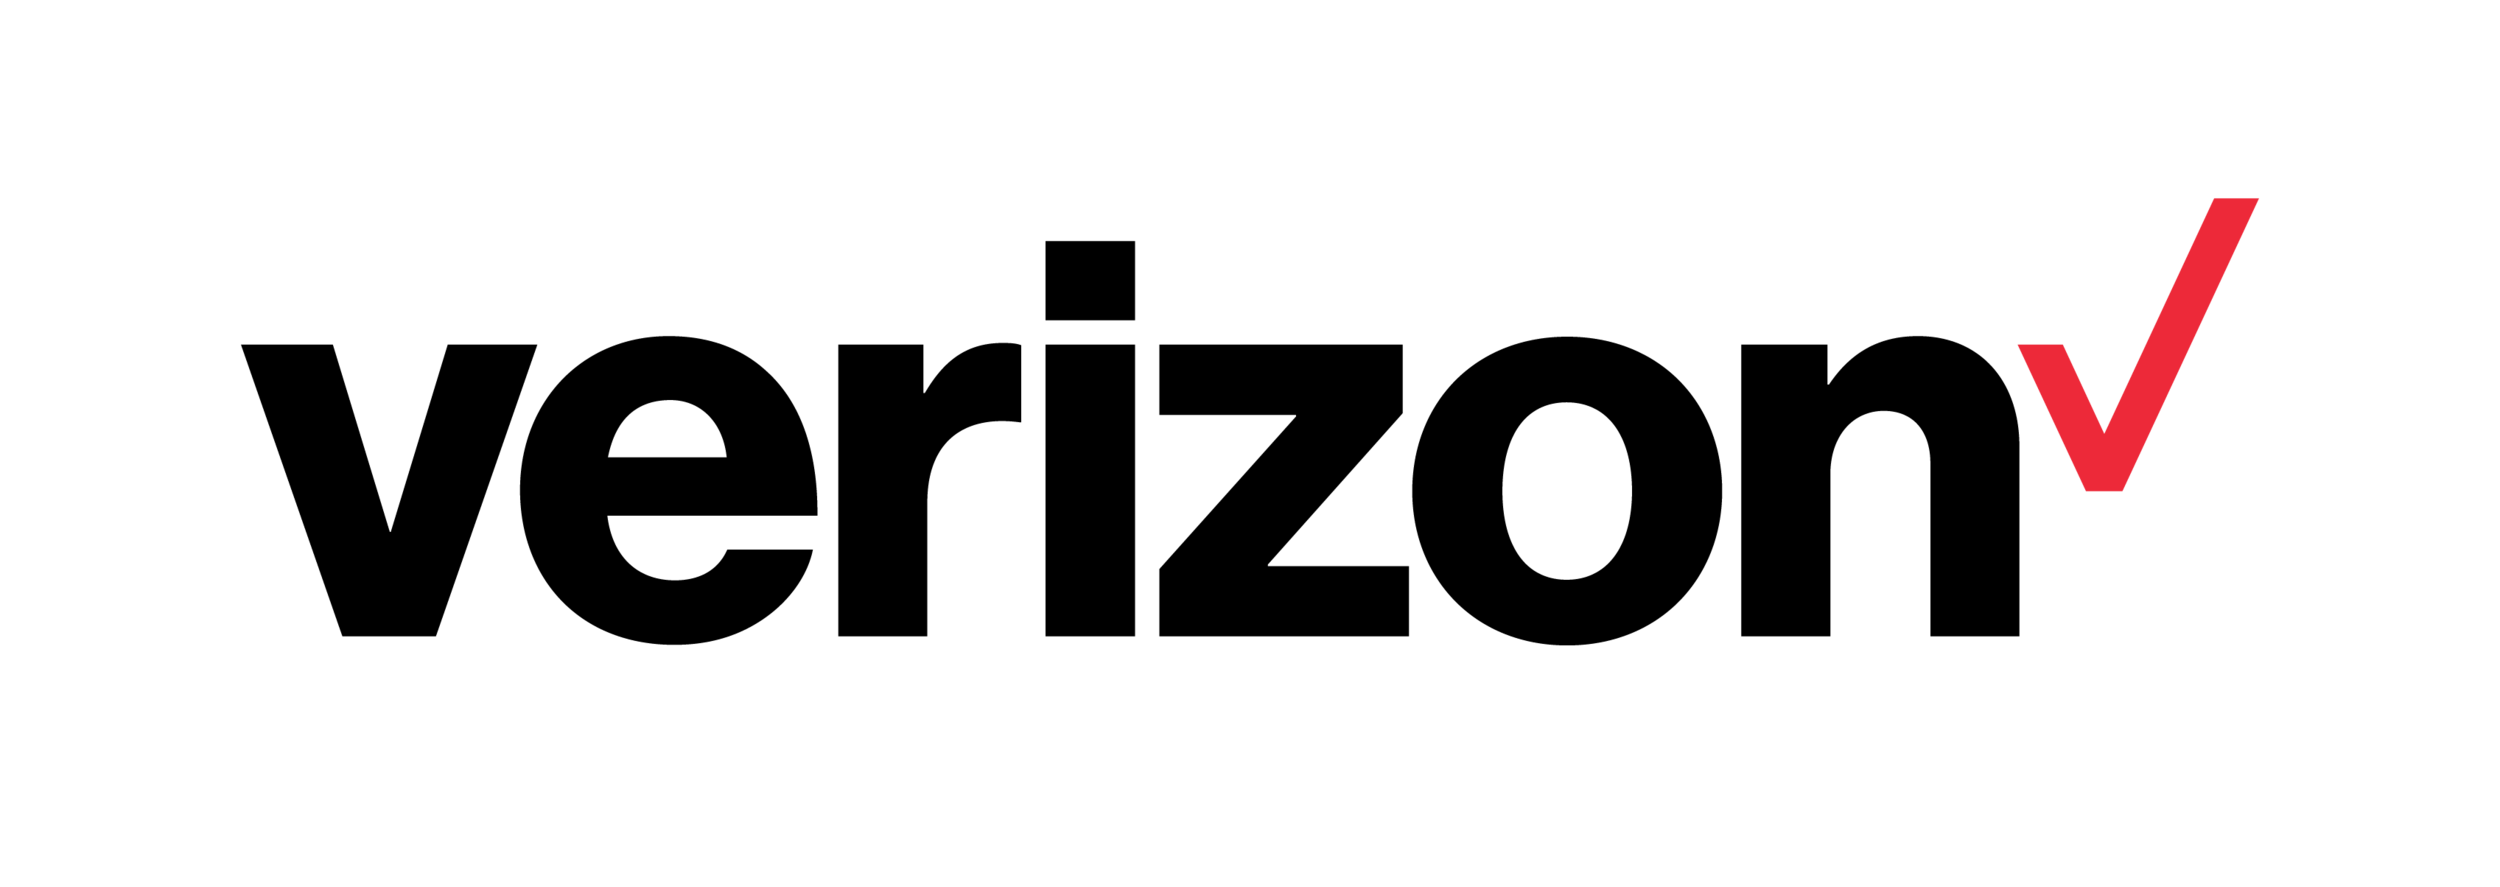 Verizon_RGB_Logo-Black.png